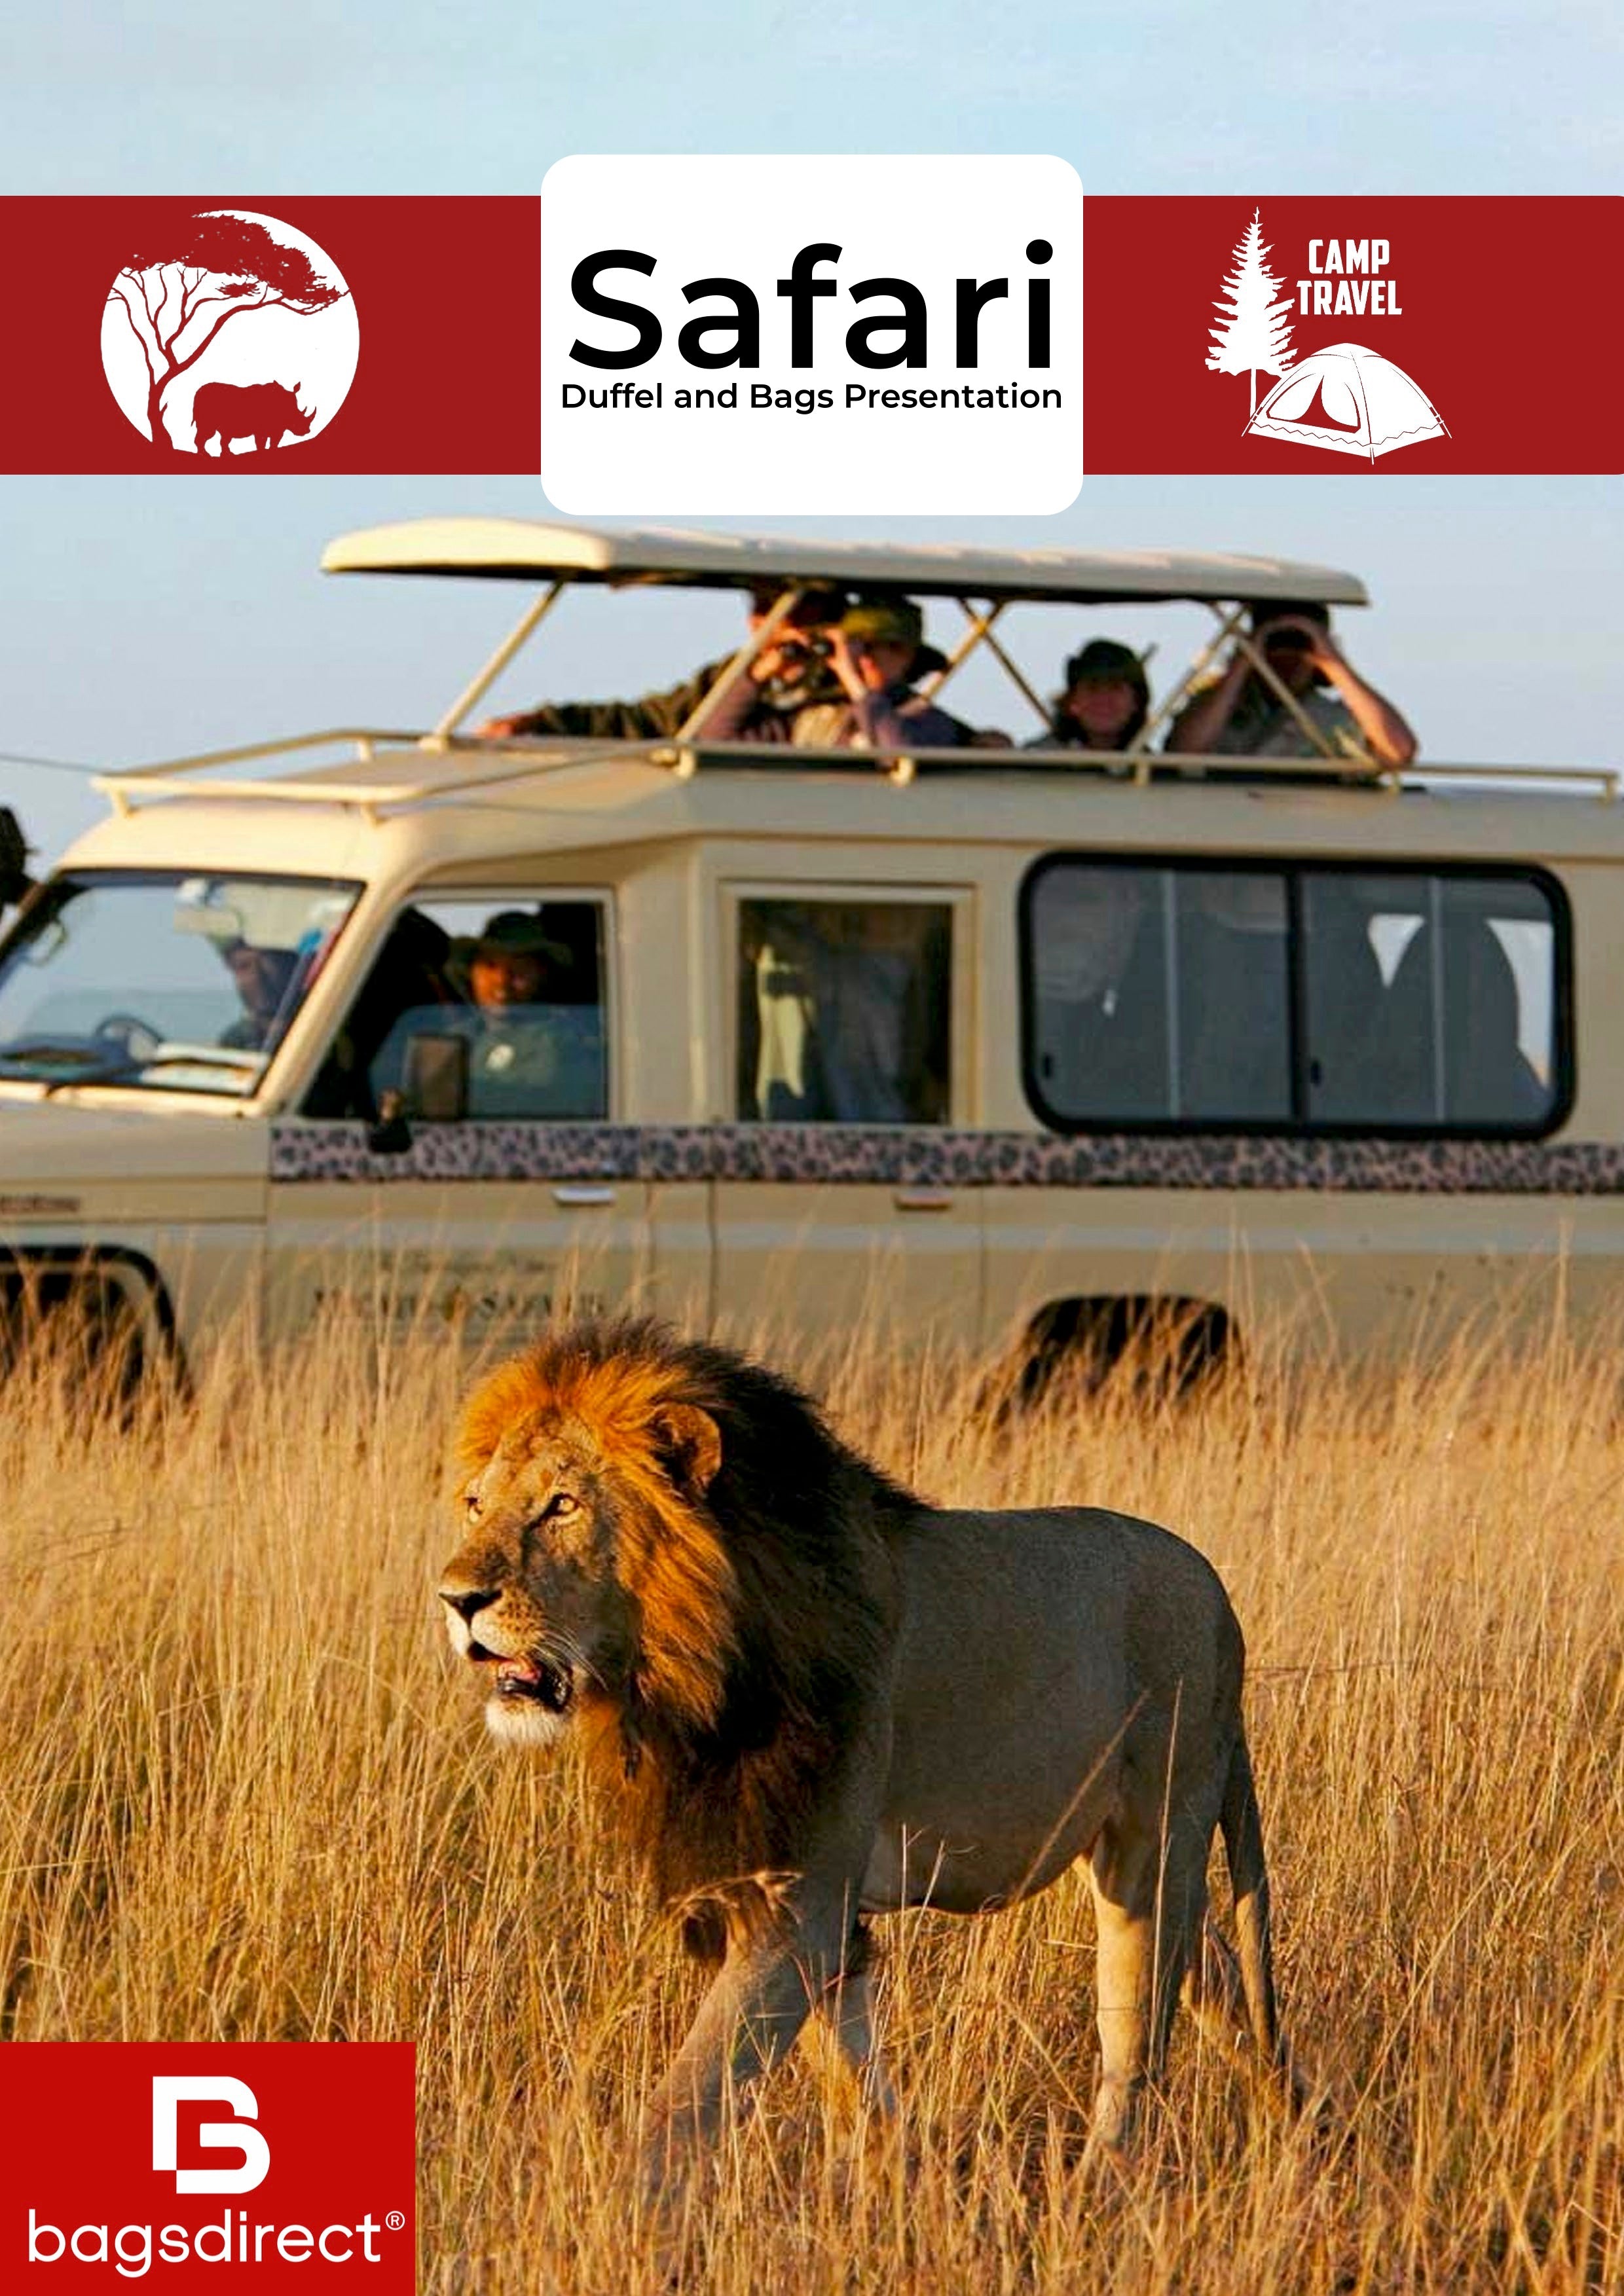 Katalog der Safaritaschen-Reihe